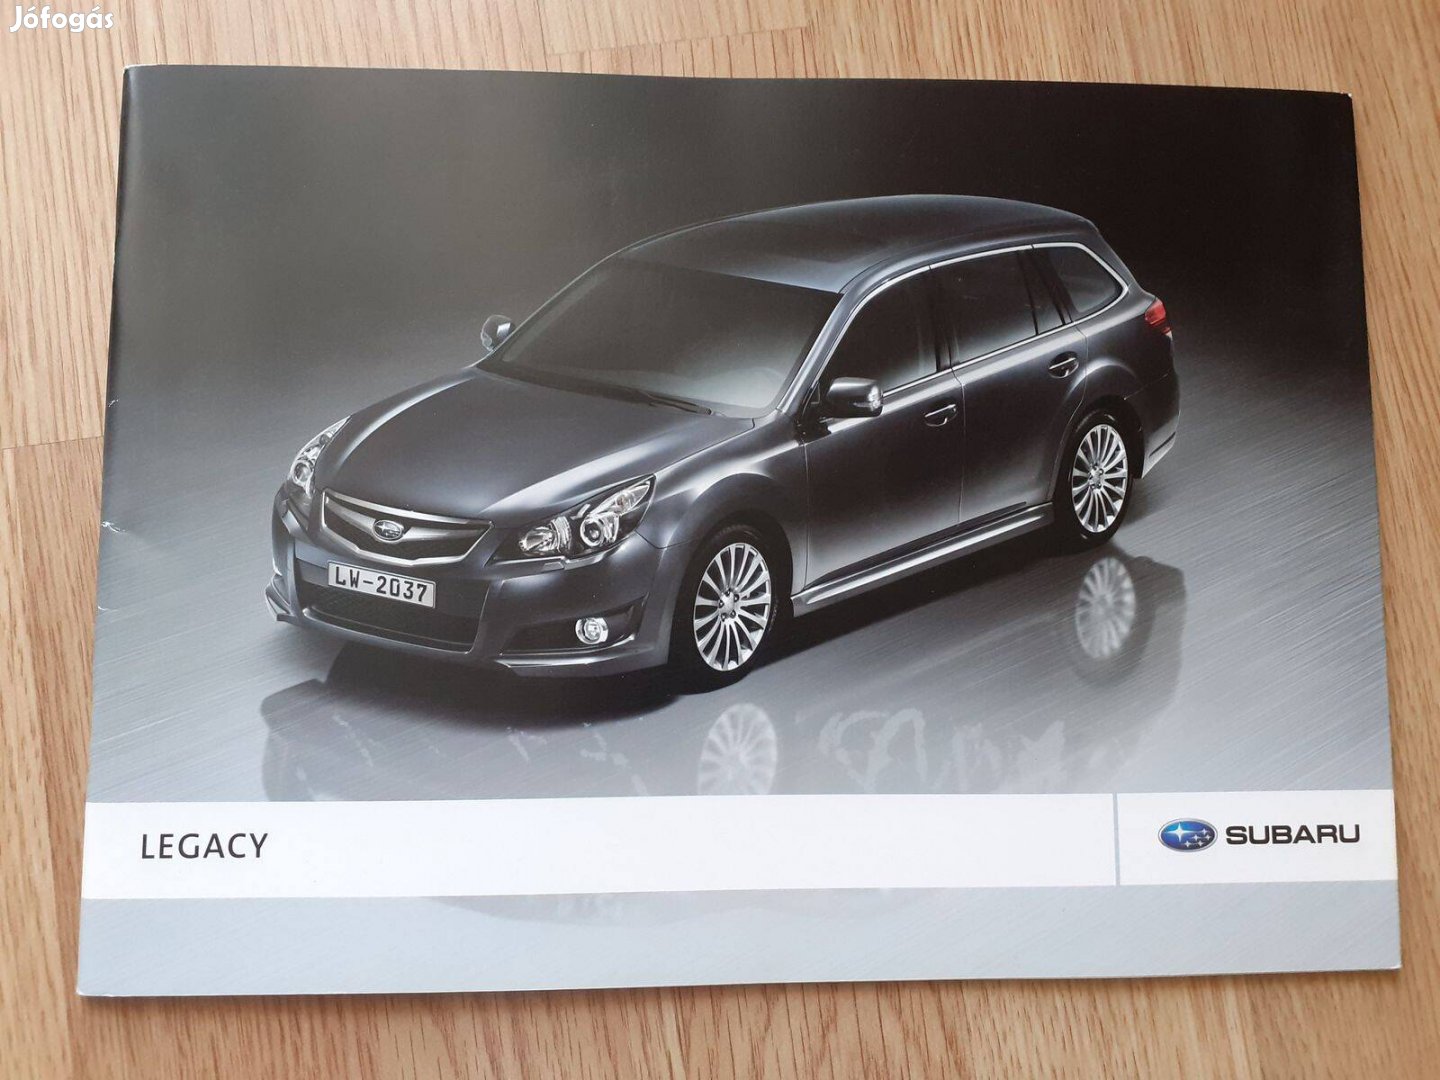 Subaru Legacy prospektus - magyar nyelvű